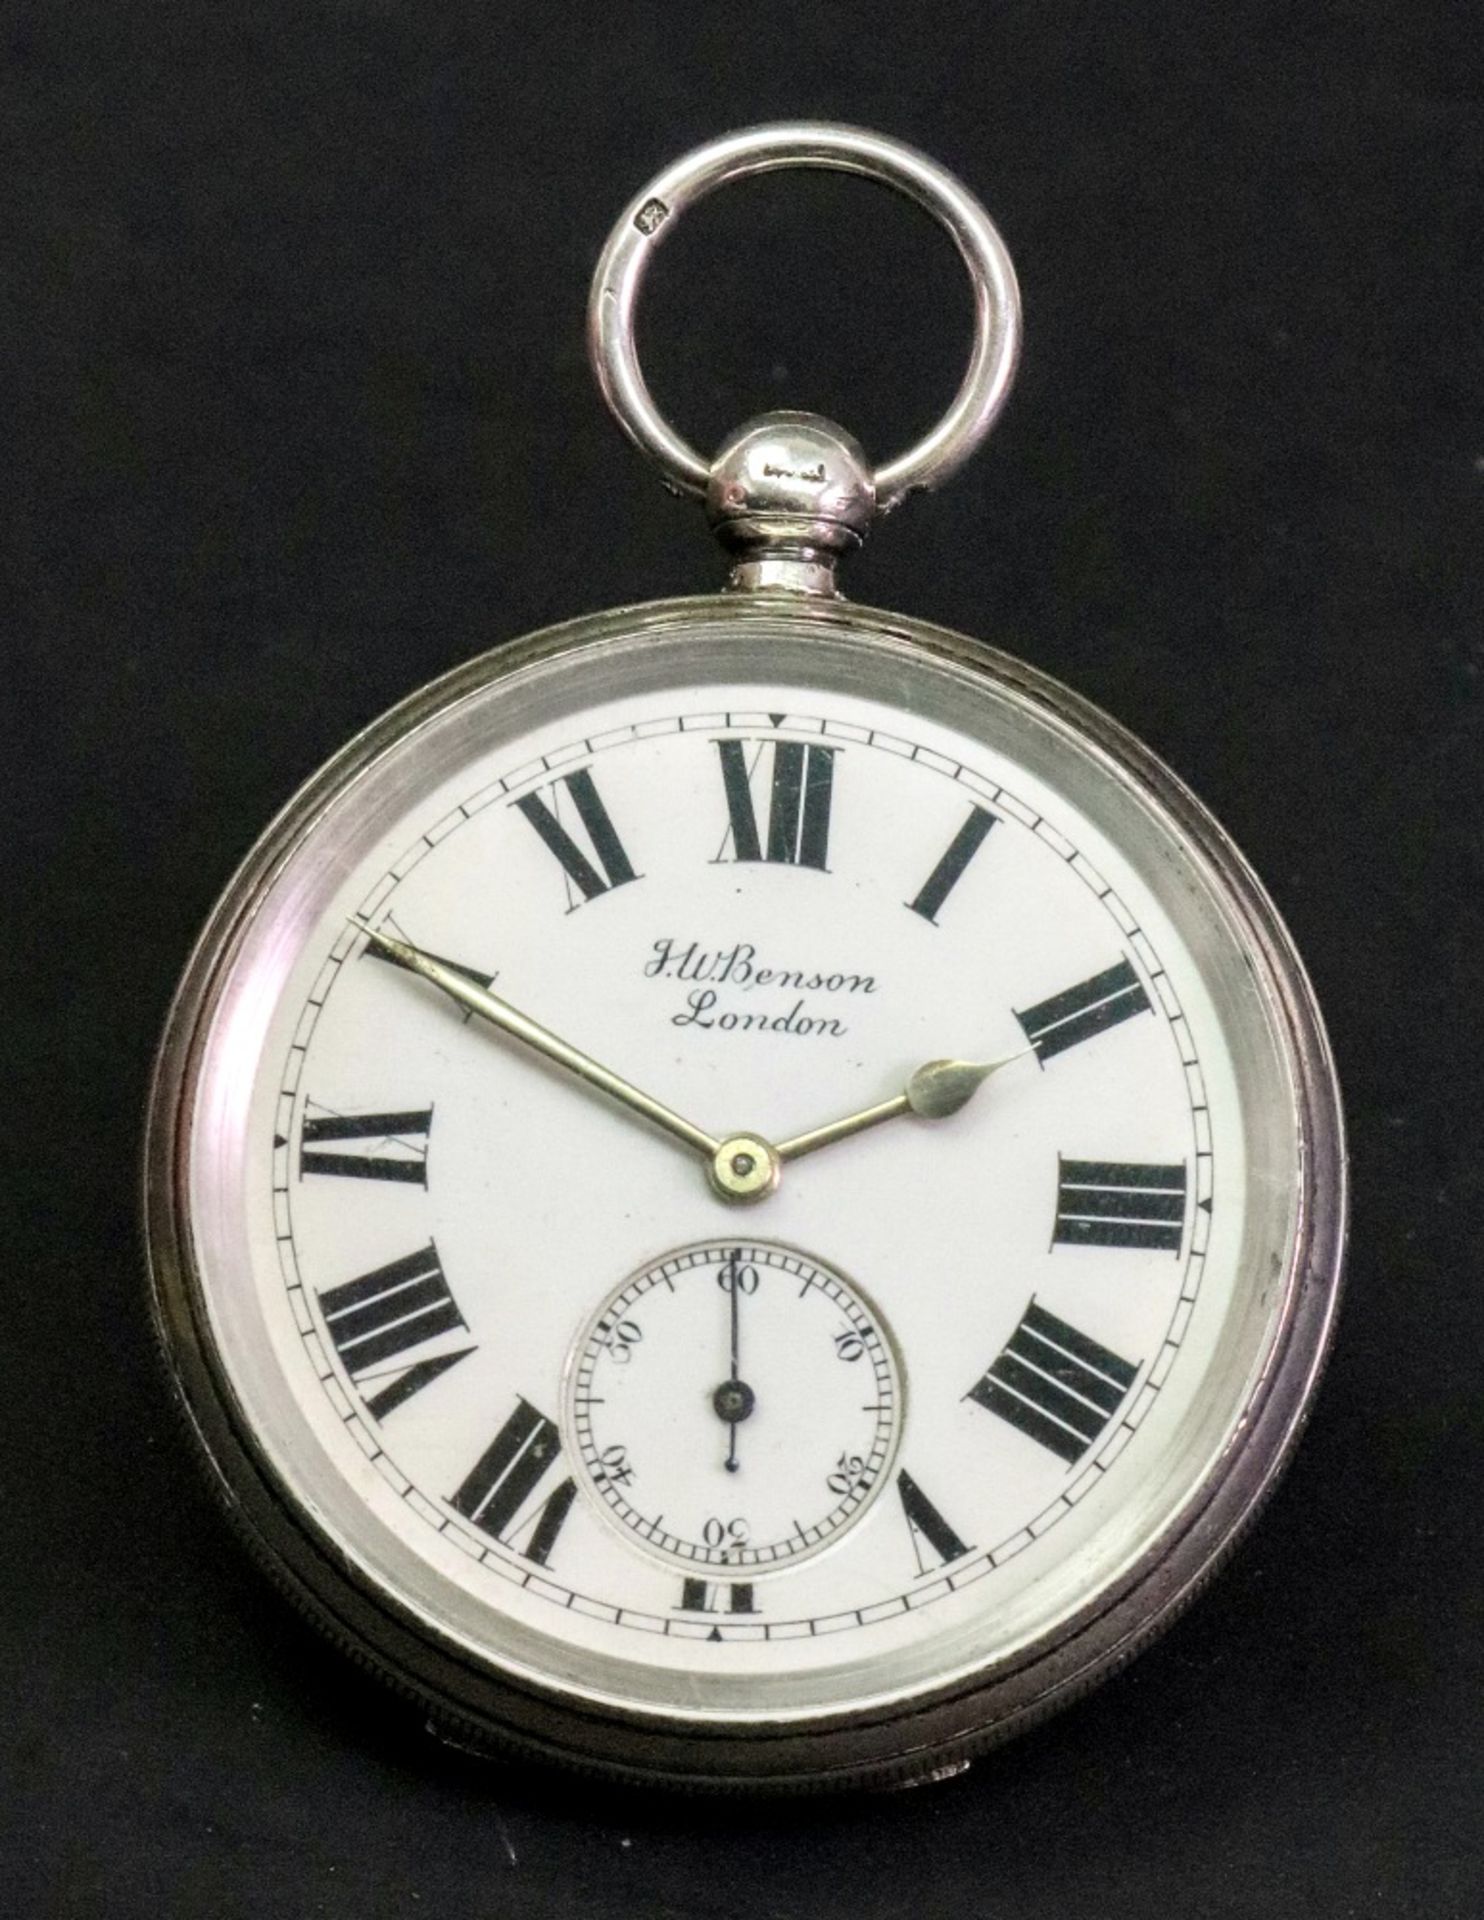 J W Benson; a gentleman's silver cased pocket watch,